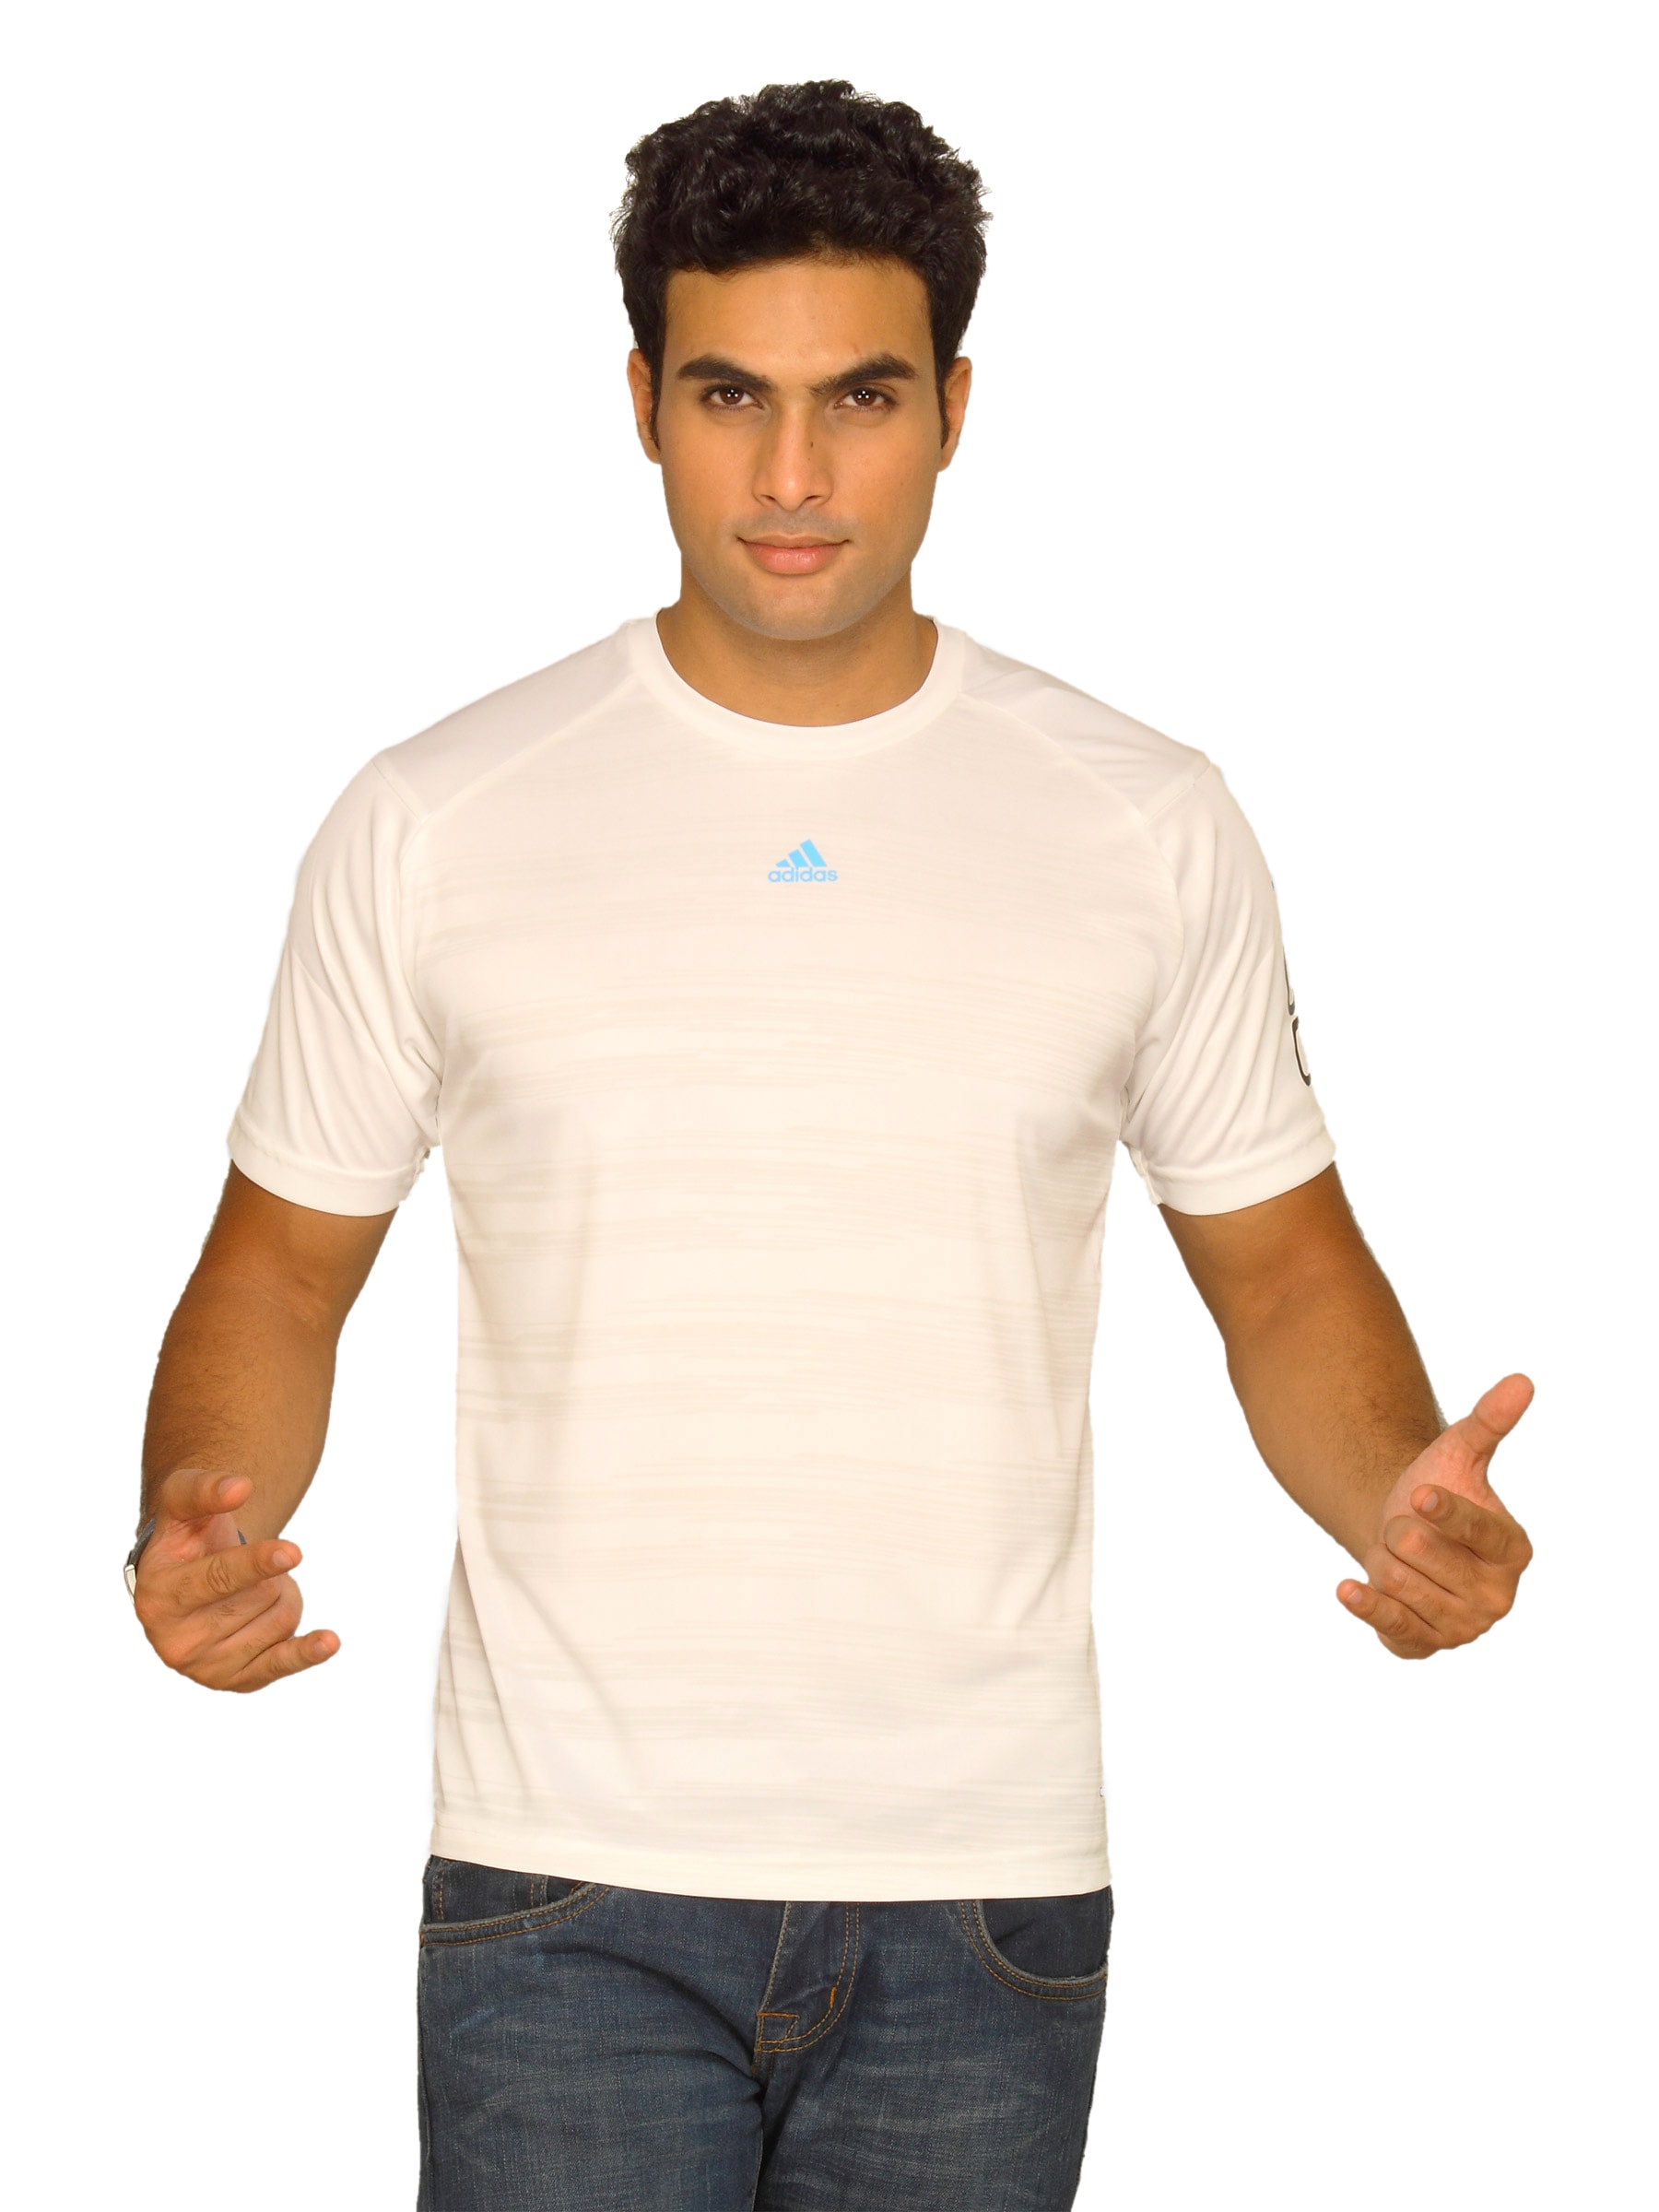 ADIDAS Men's F50 ST CL White T-shirt